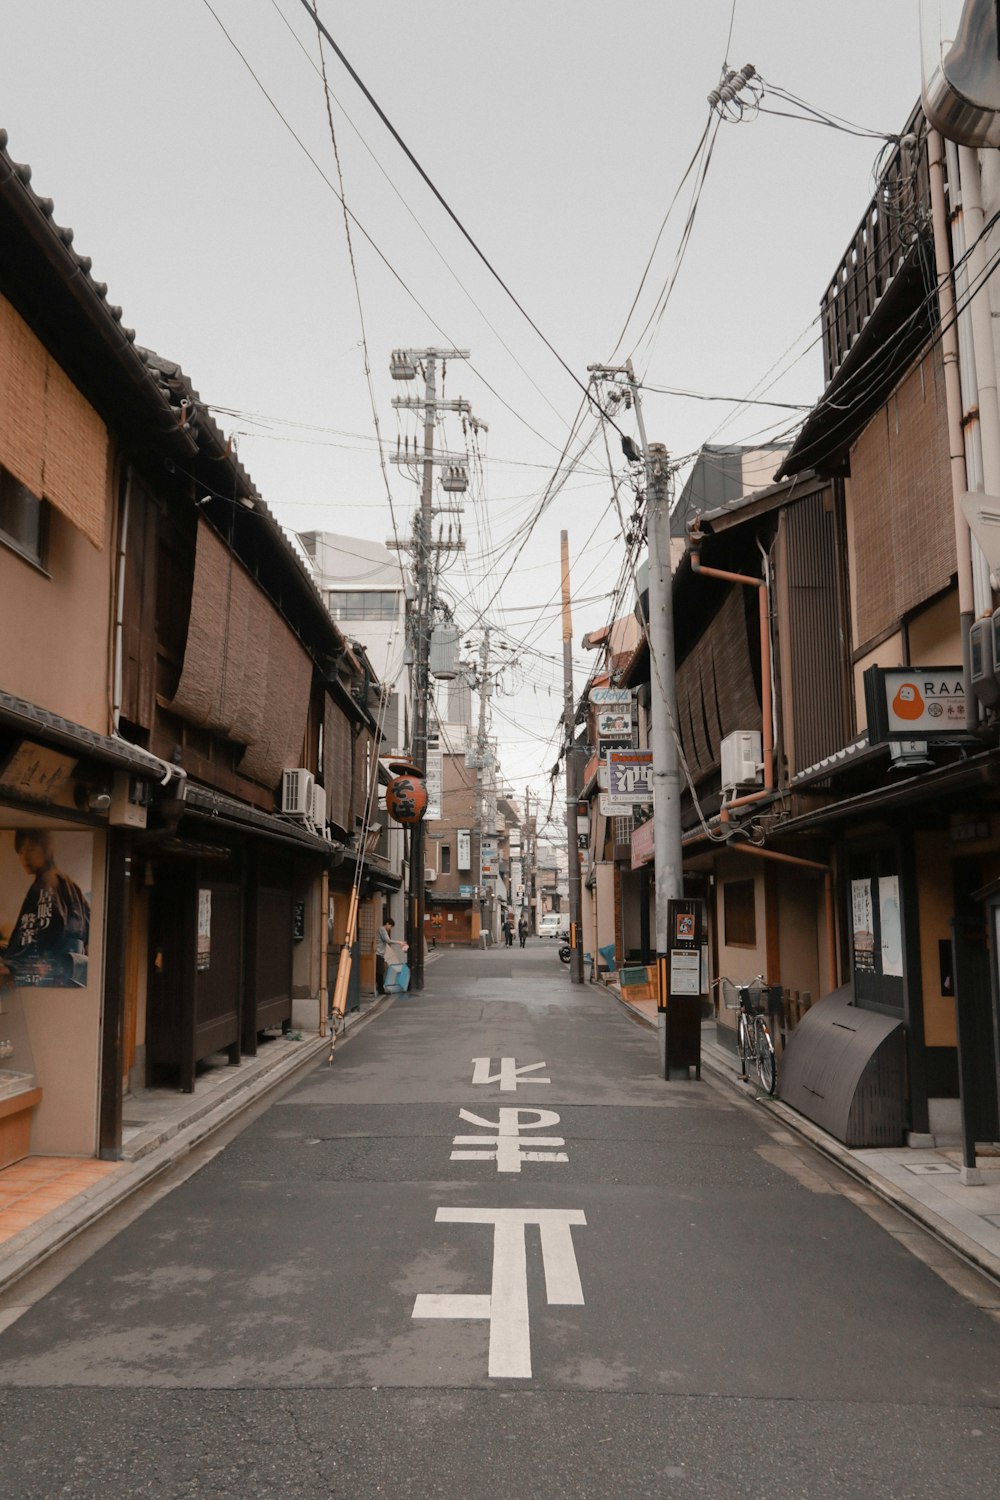 empty street between buildings during daytime